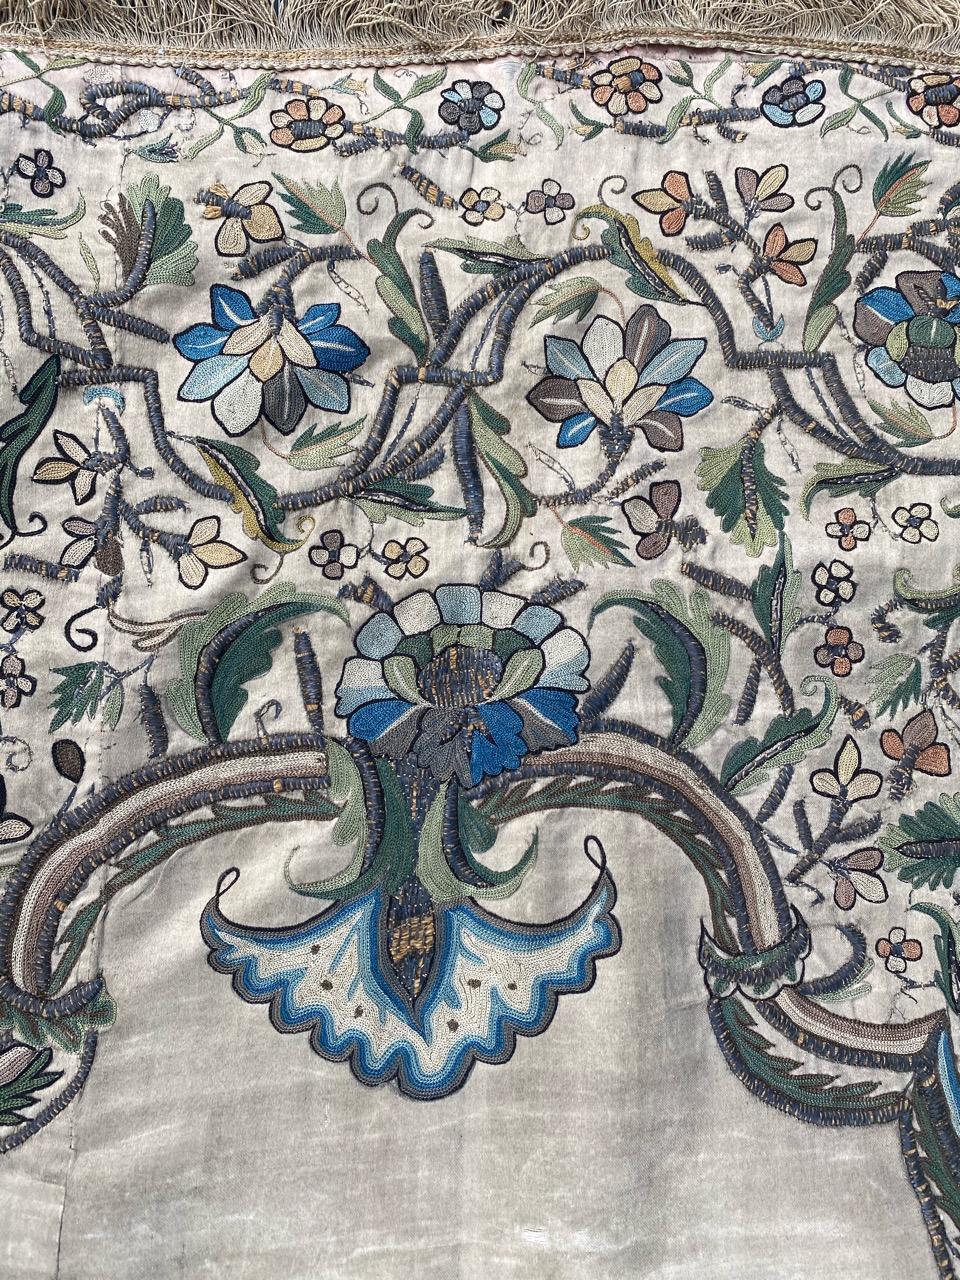 Metal Bobyrug’s Wonderful Antique Turkish Ottoman Embroidery